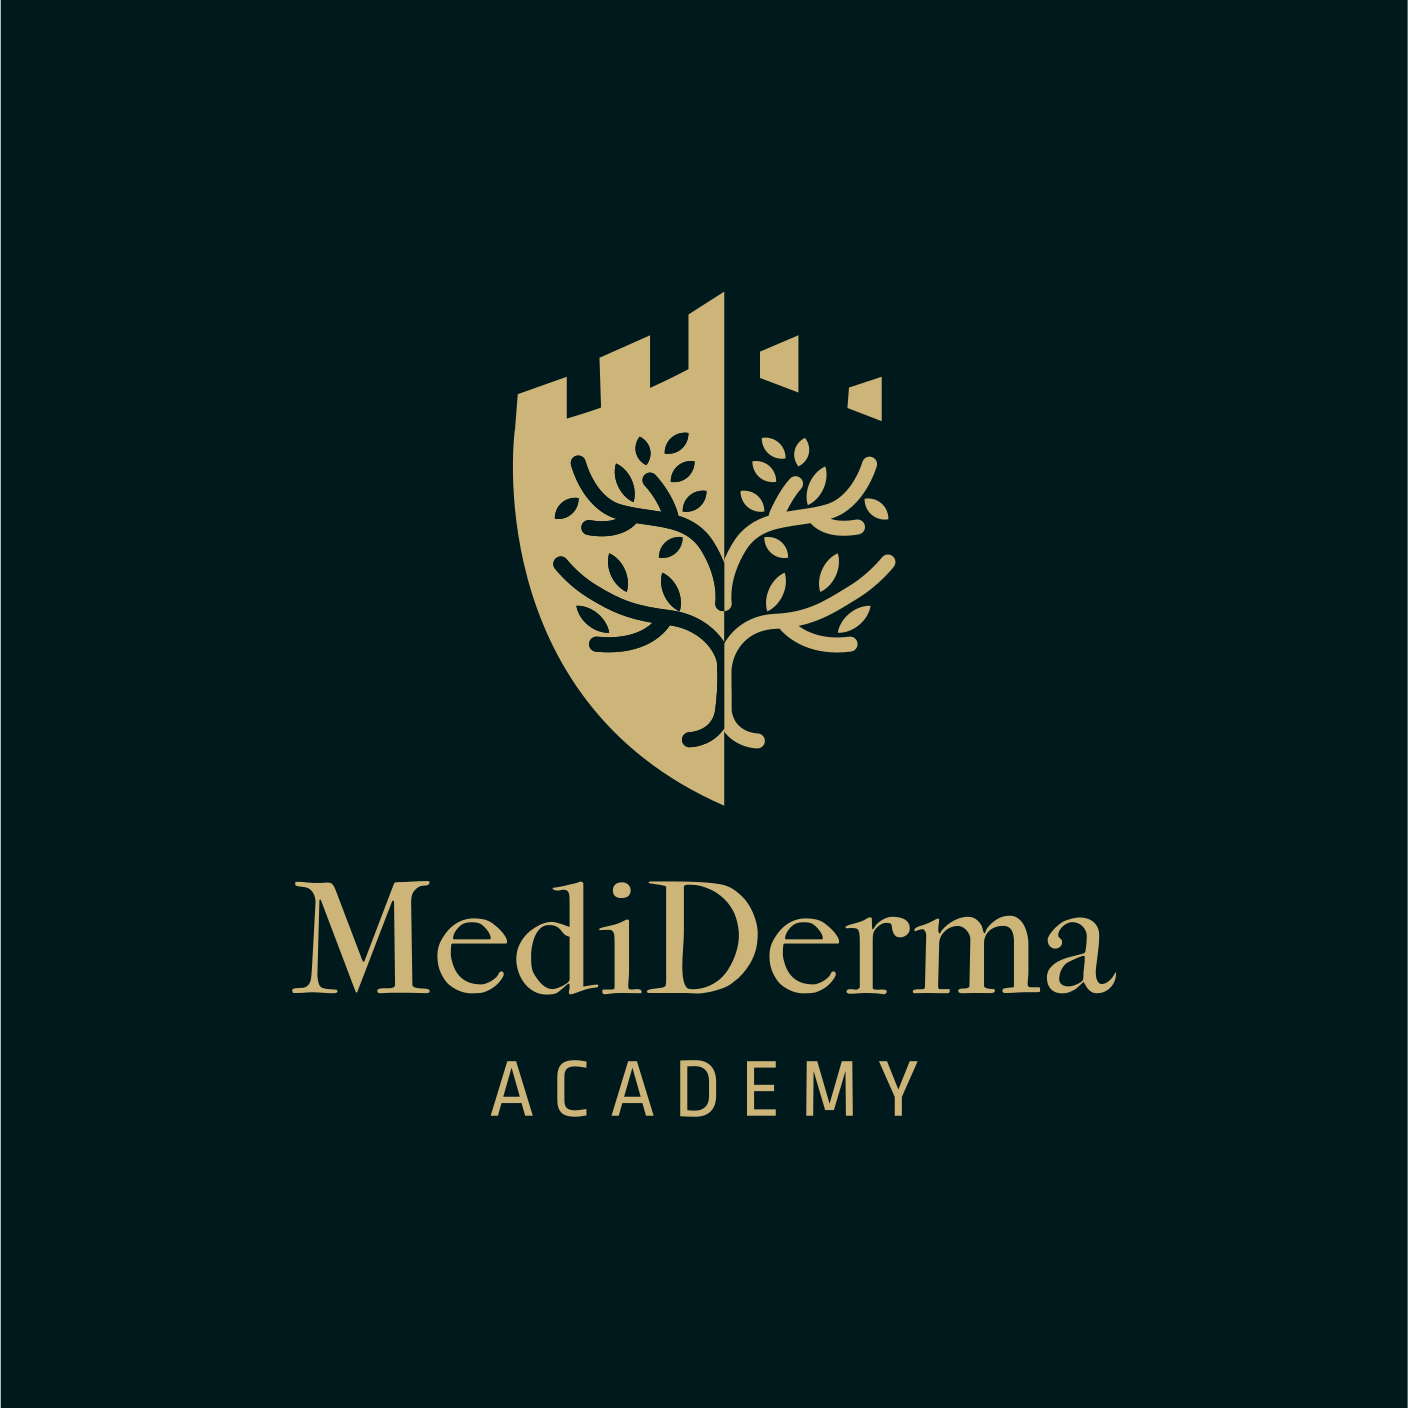 MediDerma Academy logo